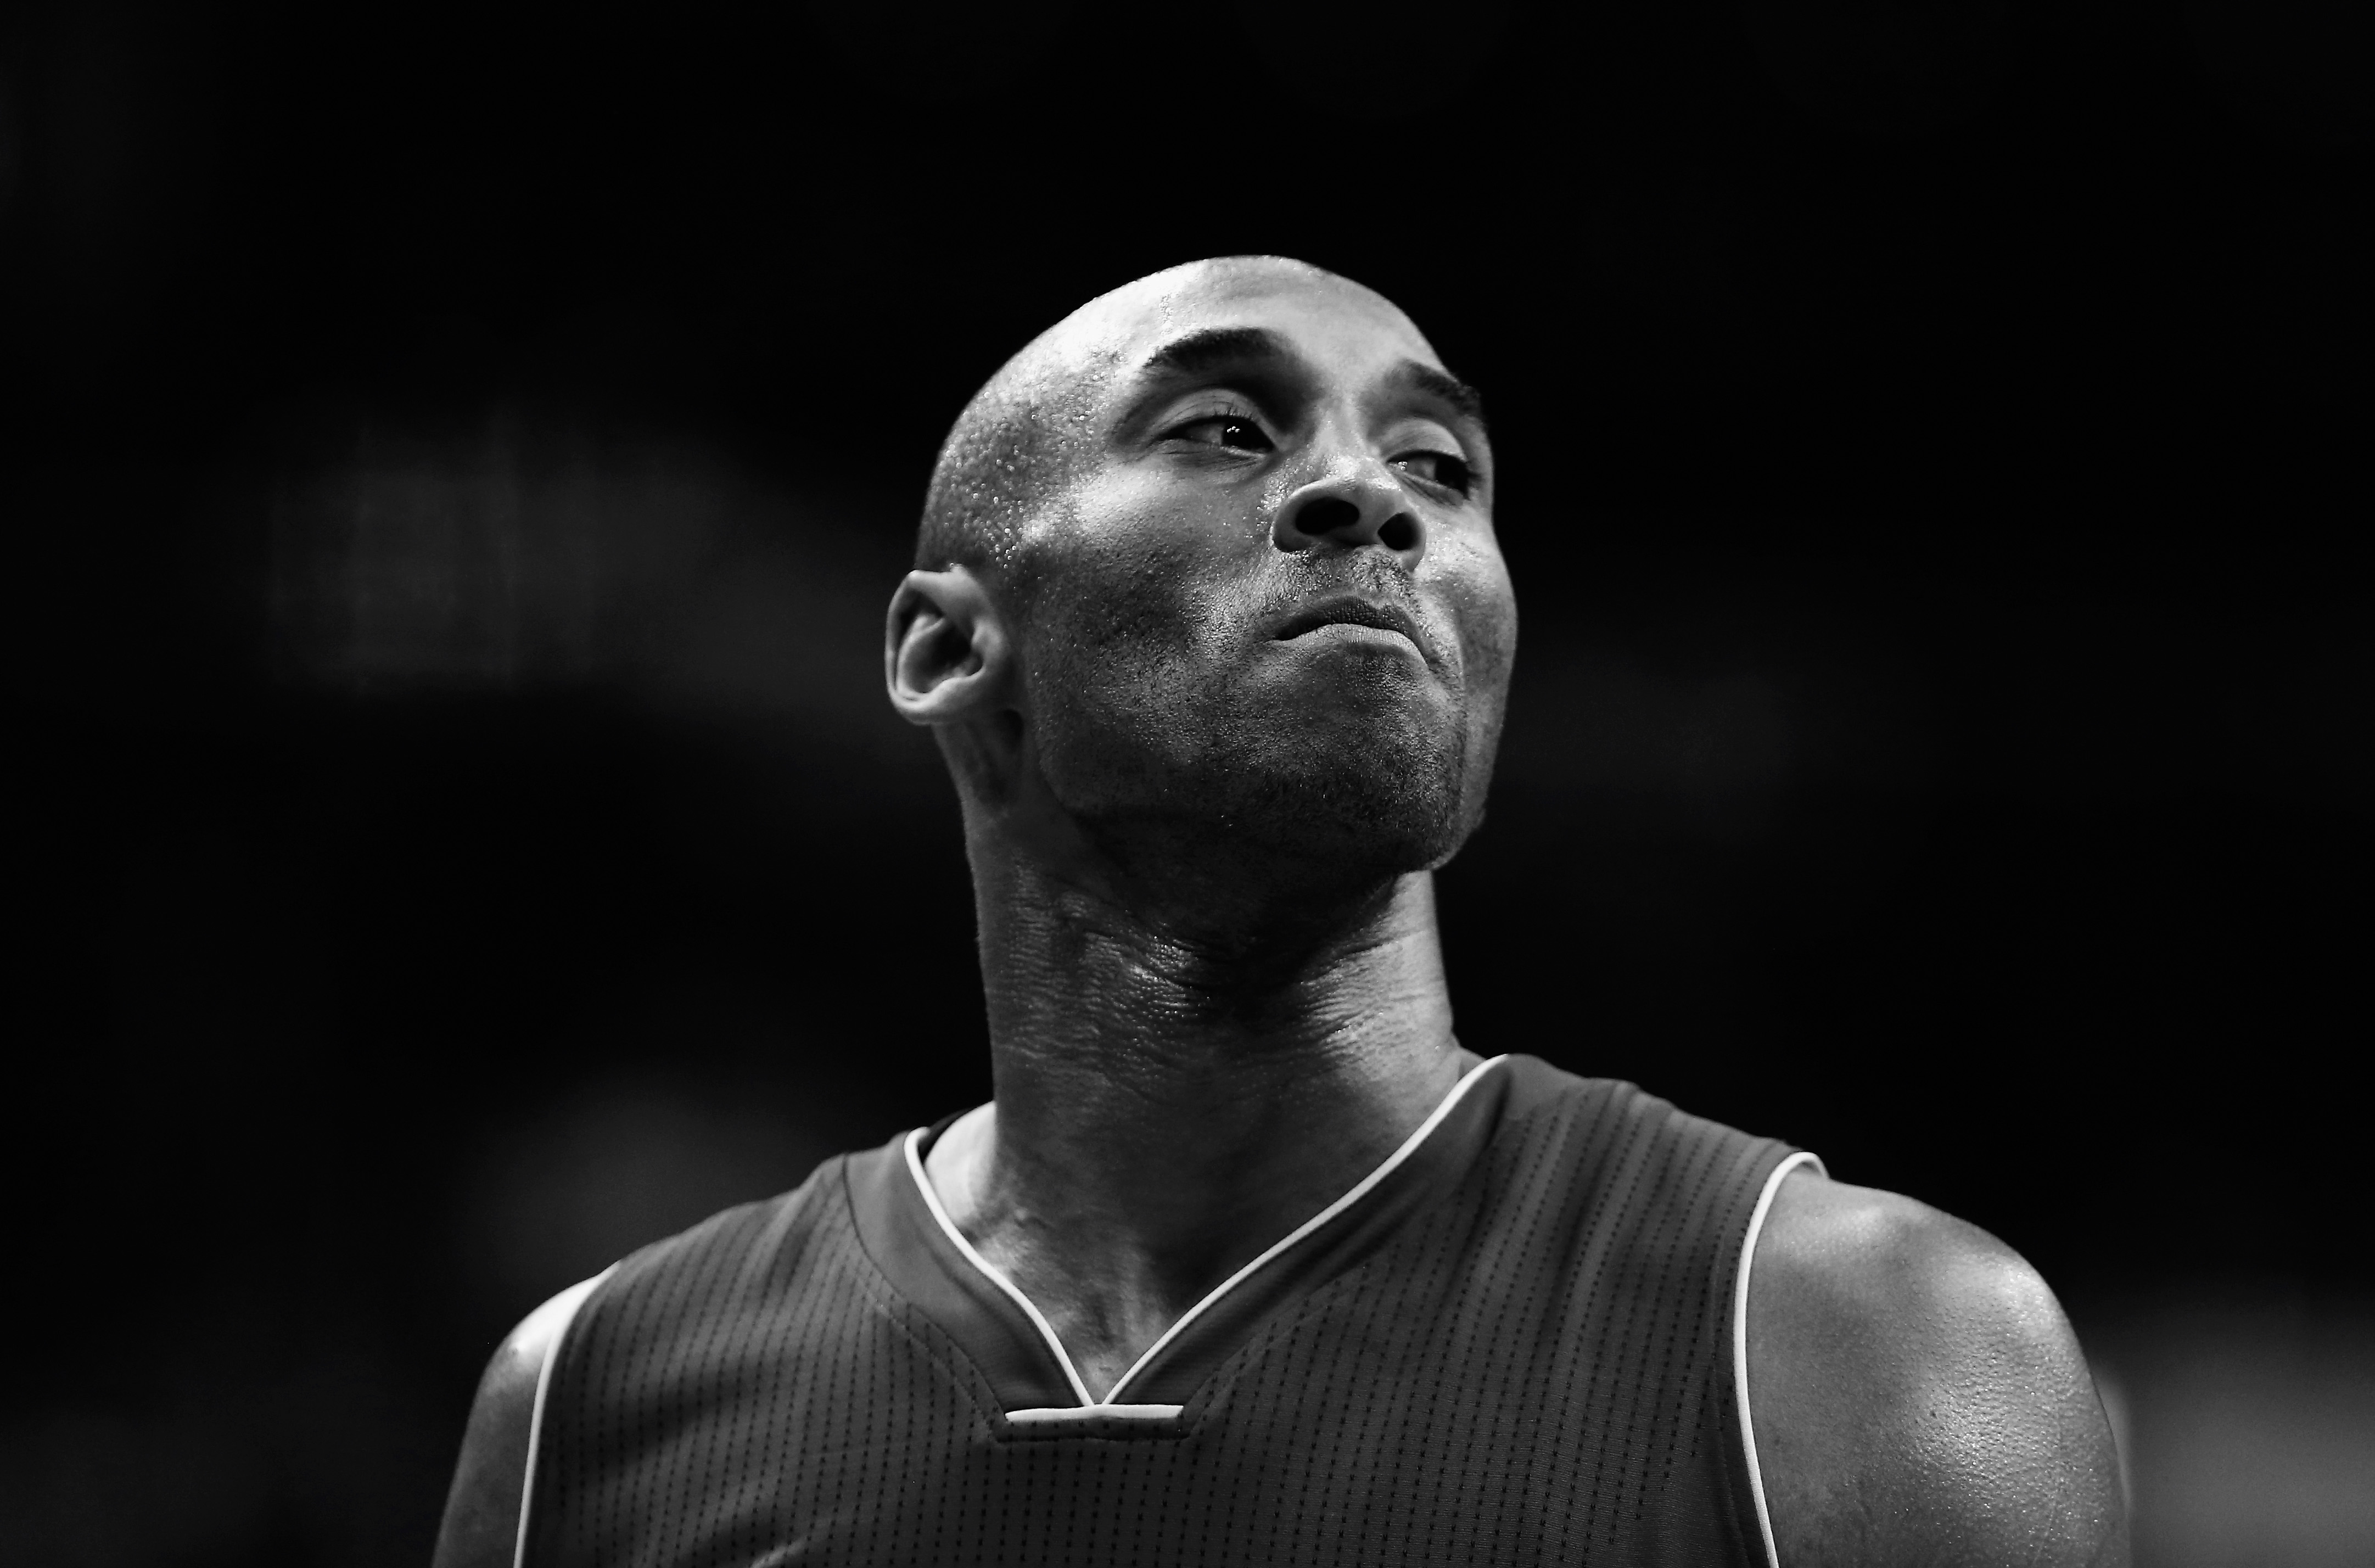 Closeup casual portrait of Los Angeles Lakers Kobe Bryant, Los